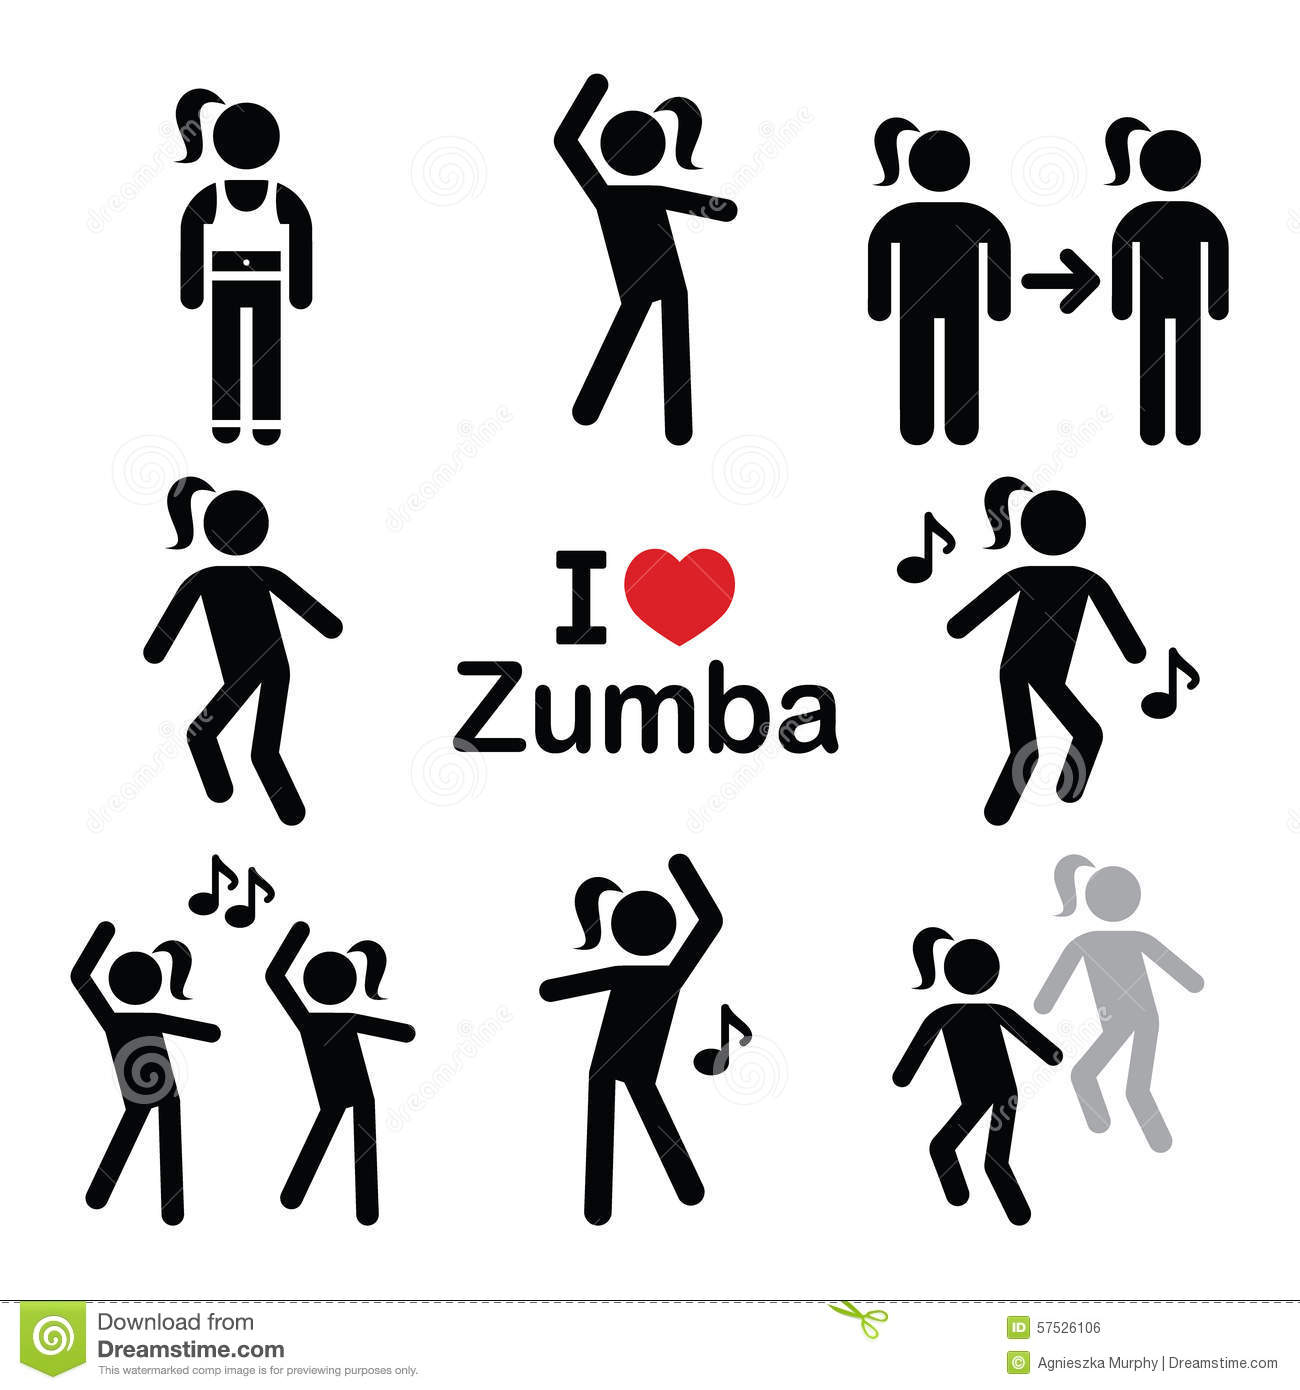 zumba dance workout videos torrent download